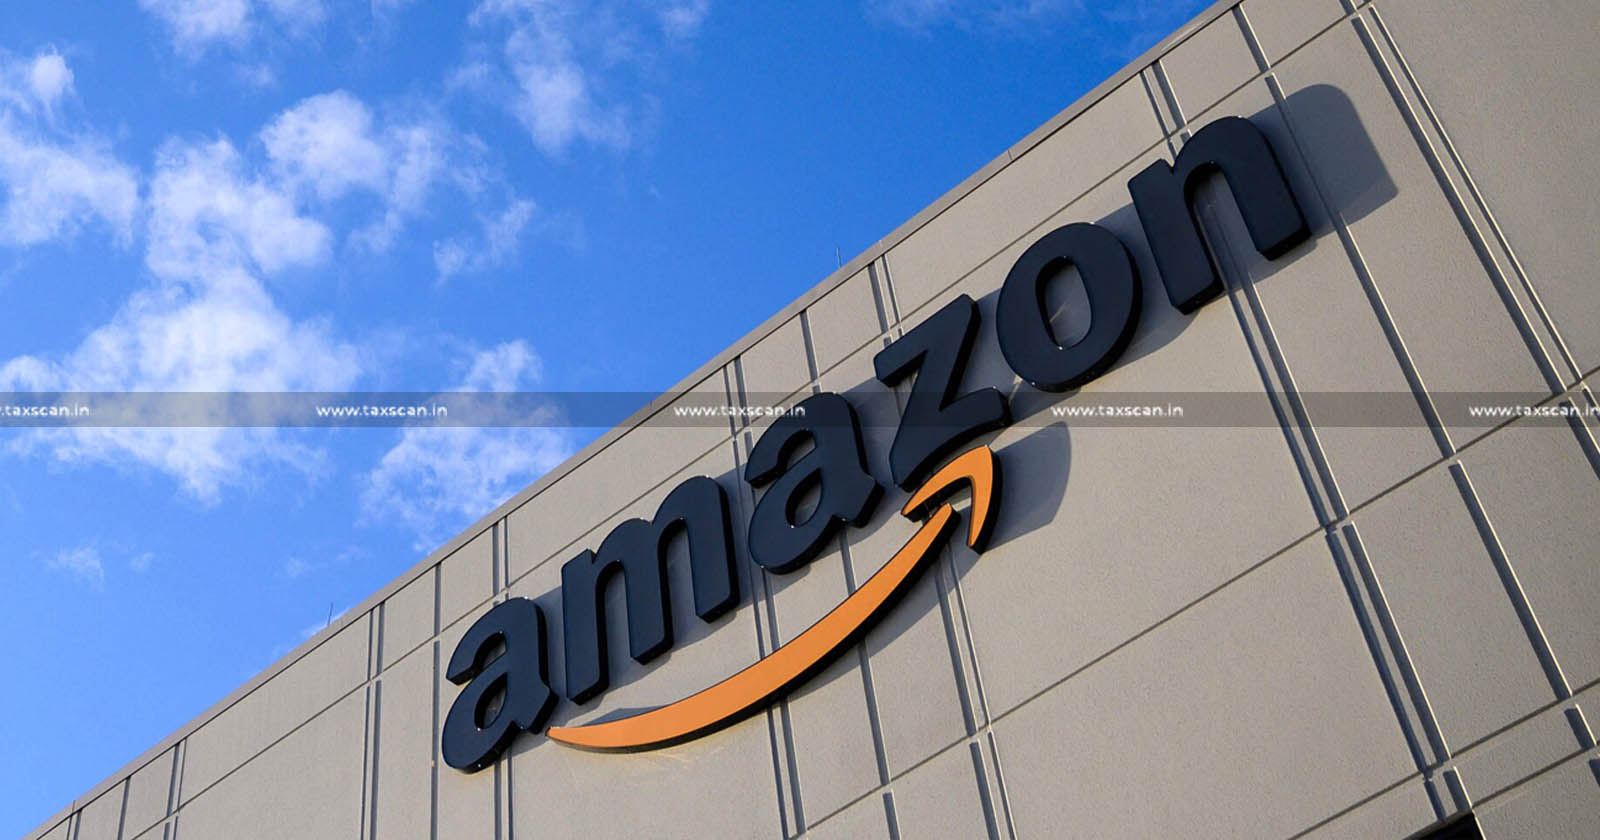 Amazon - Amazon Jobs - Amazon Hiring - Amazon Careers - B.com Jobs In Amazon - Job Opportunities In Amazon - Taxscan